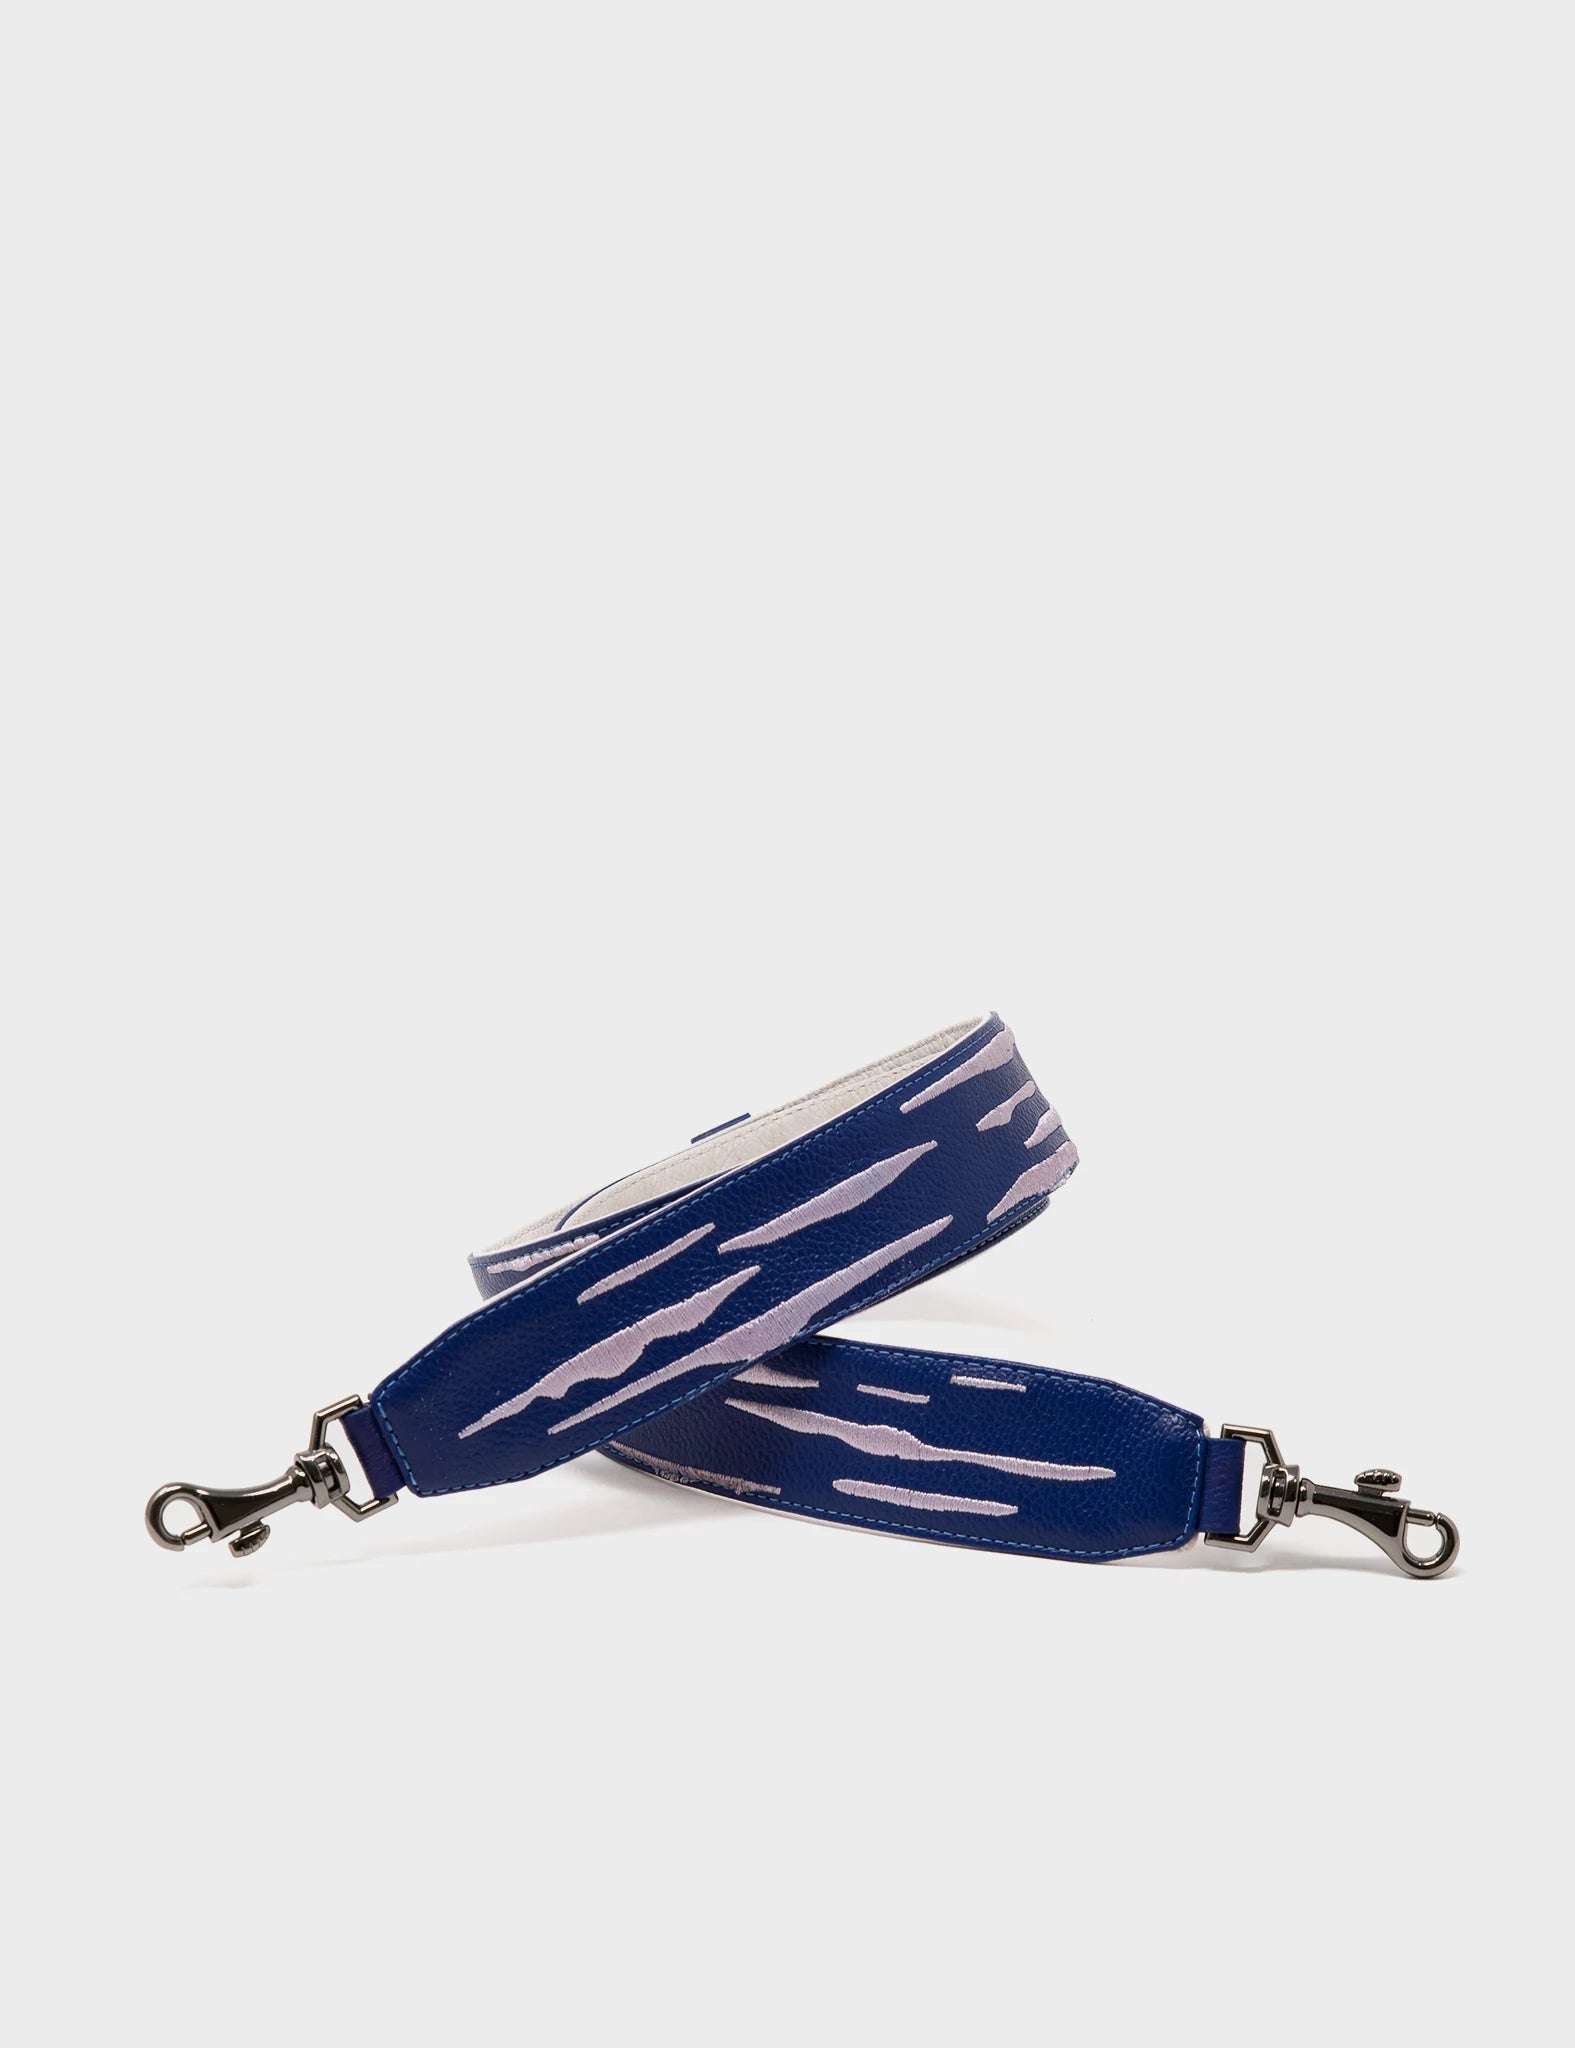 Detachable Royal Blue Leather Shoulder Strap - Clouds Embroidery - Side